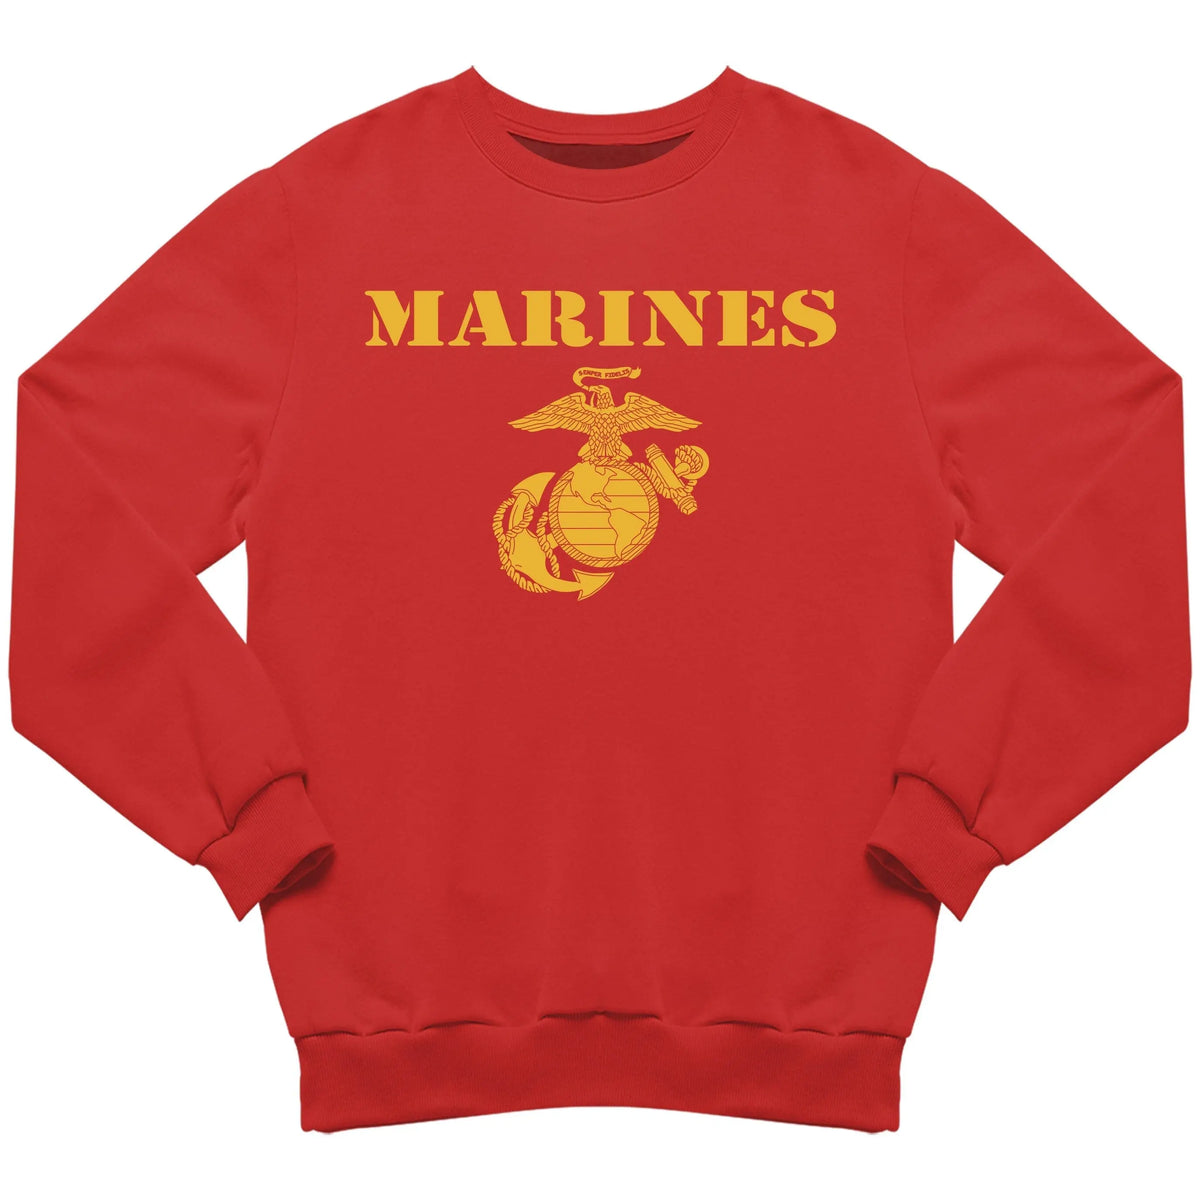 Red & Gold Vintage Marines Sweatshirt